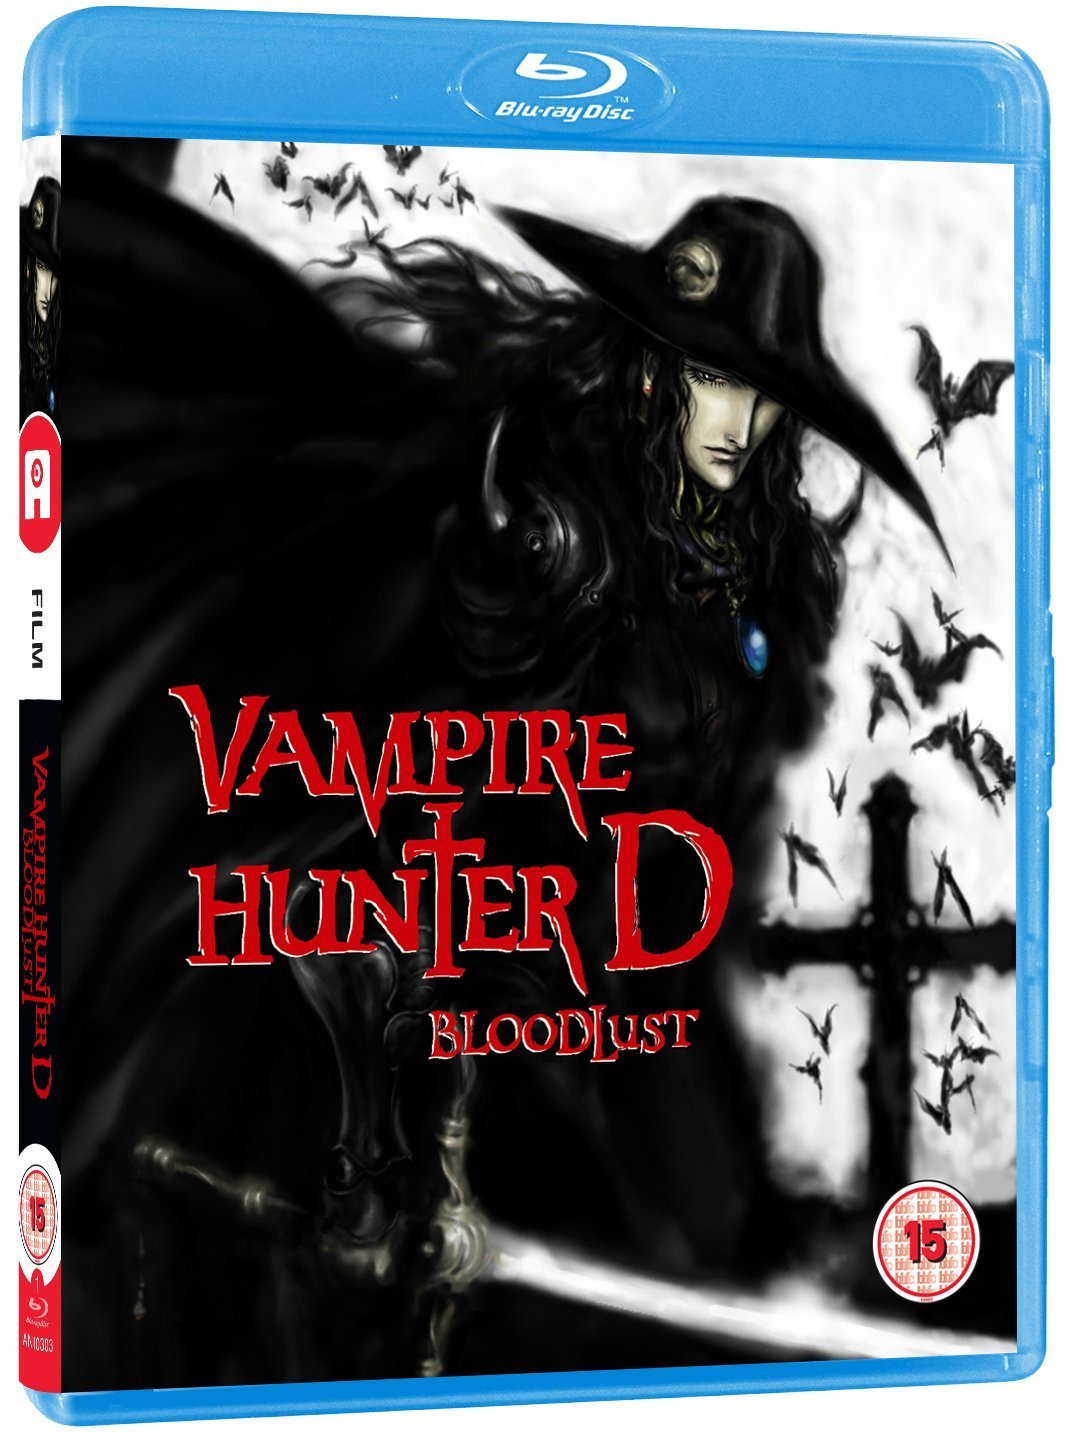 Vampire Hunter D: Bloodlust - Anime Movie Review - DoubleSama